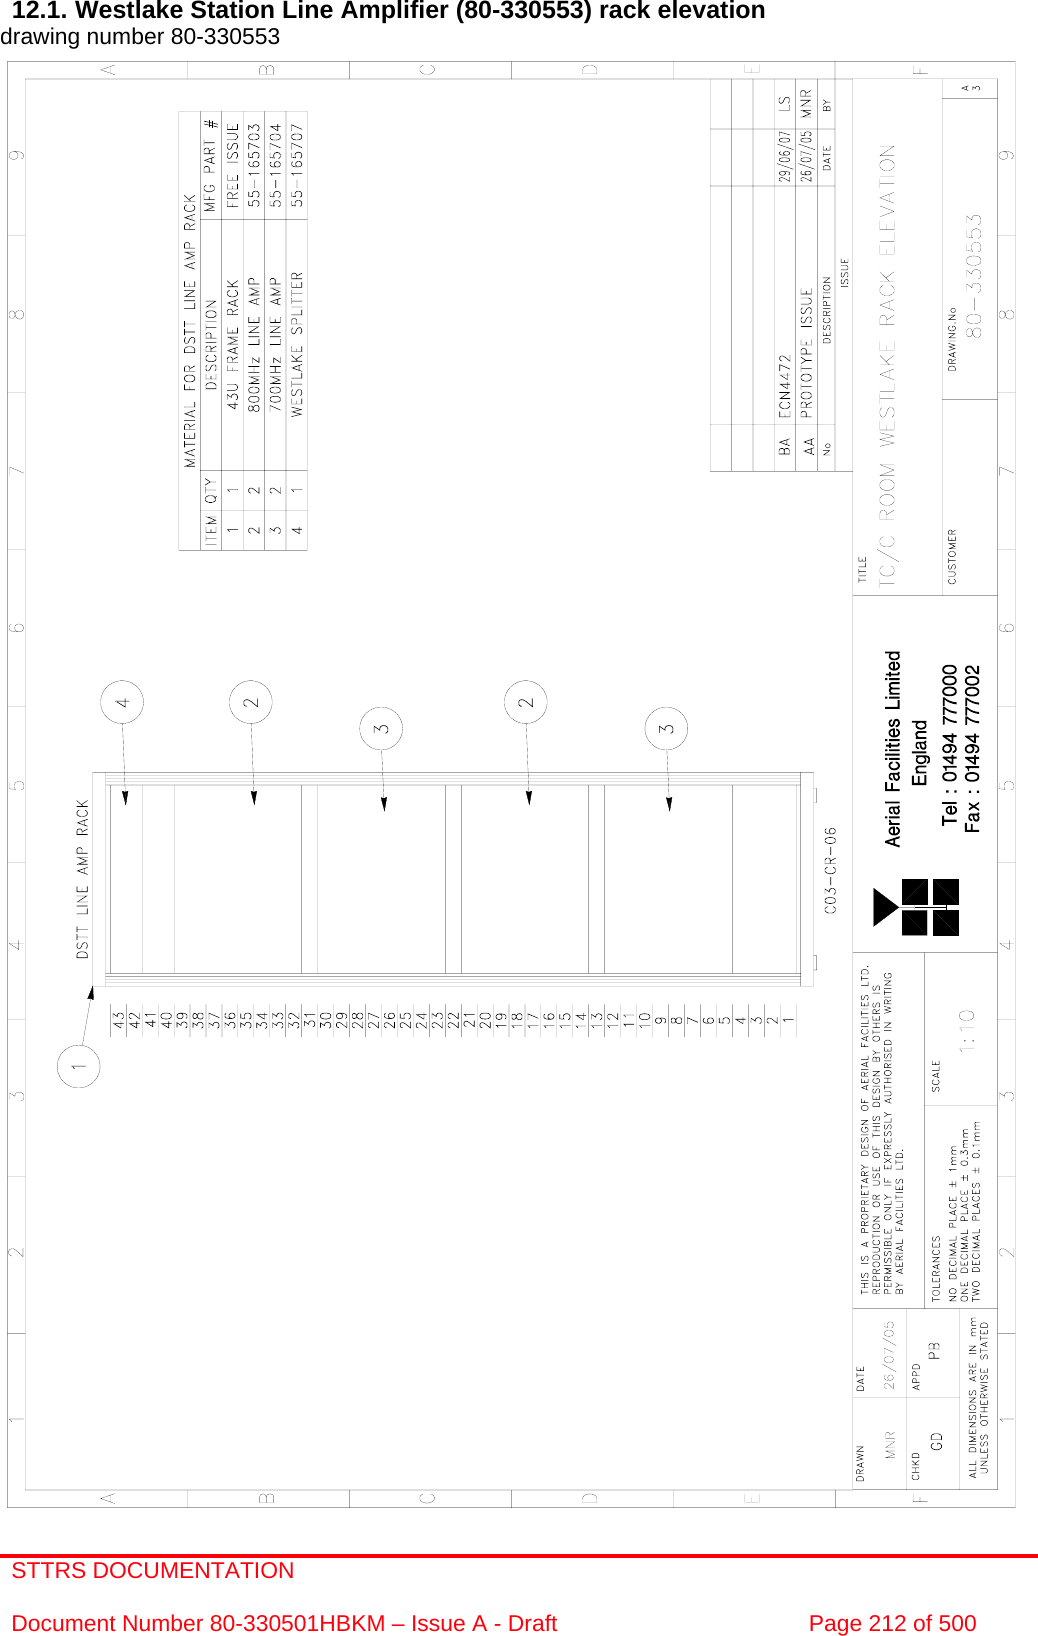 STTRS DOCUMENTATION  Document Number 80-330501HBKM – Issue A - Draft  Page 212 of 500   12.1. Westlake Station Line Amplifier (80-330553) rack elevation  drawing number 80-330553                                                    